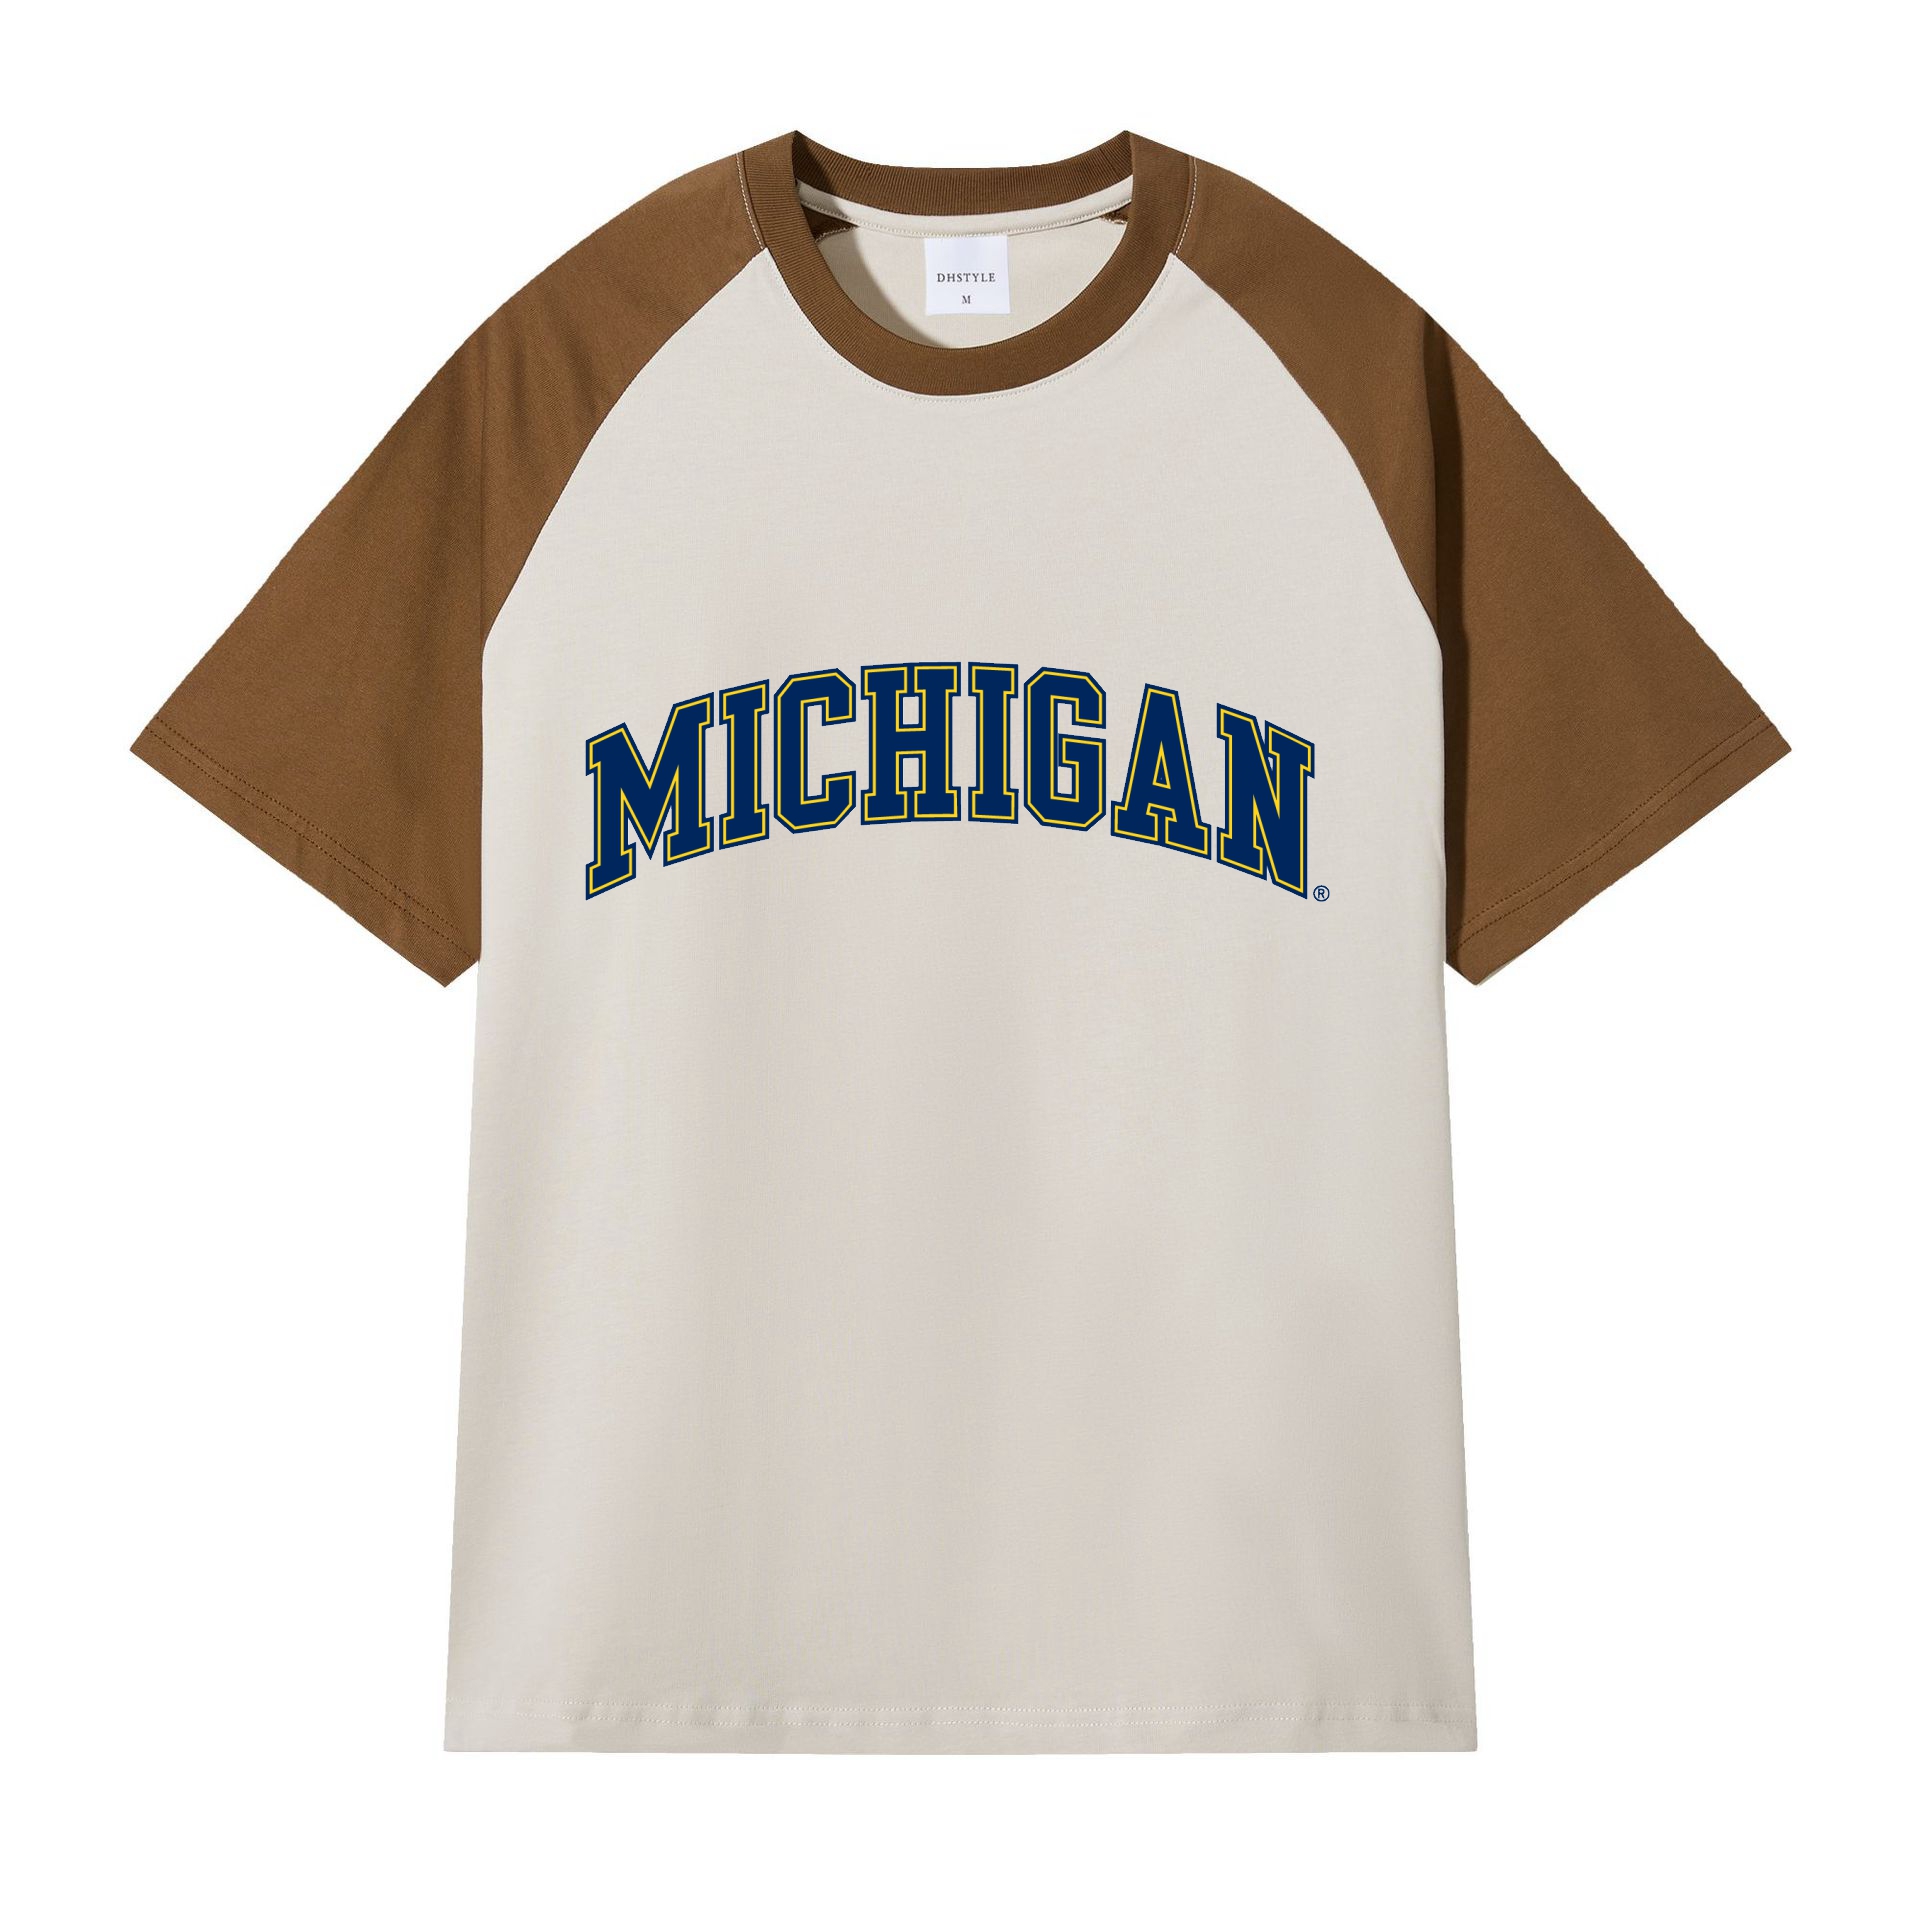 Michigan Summer Tee Drop Shoulder T Shirt Raglan Sleeves Tops Cotton Made